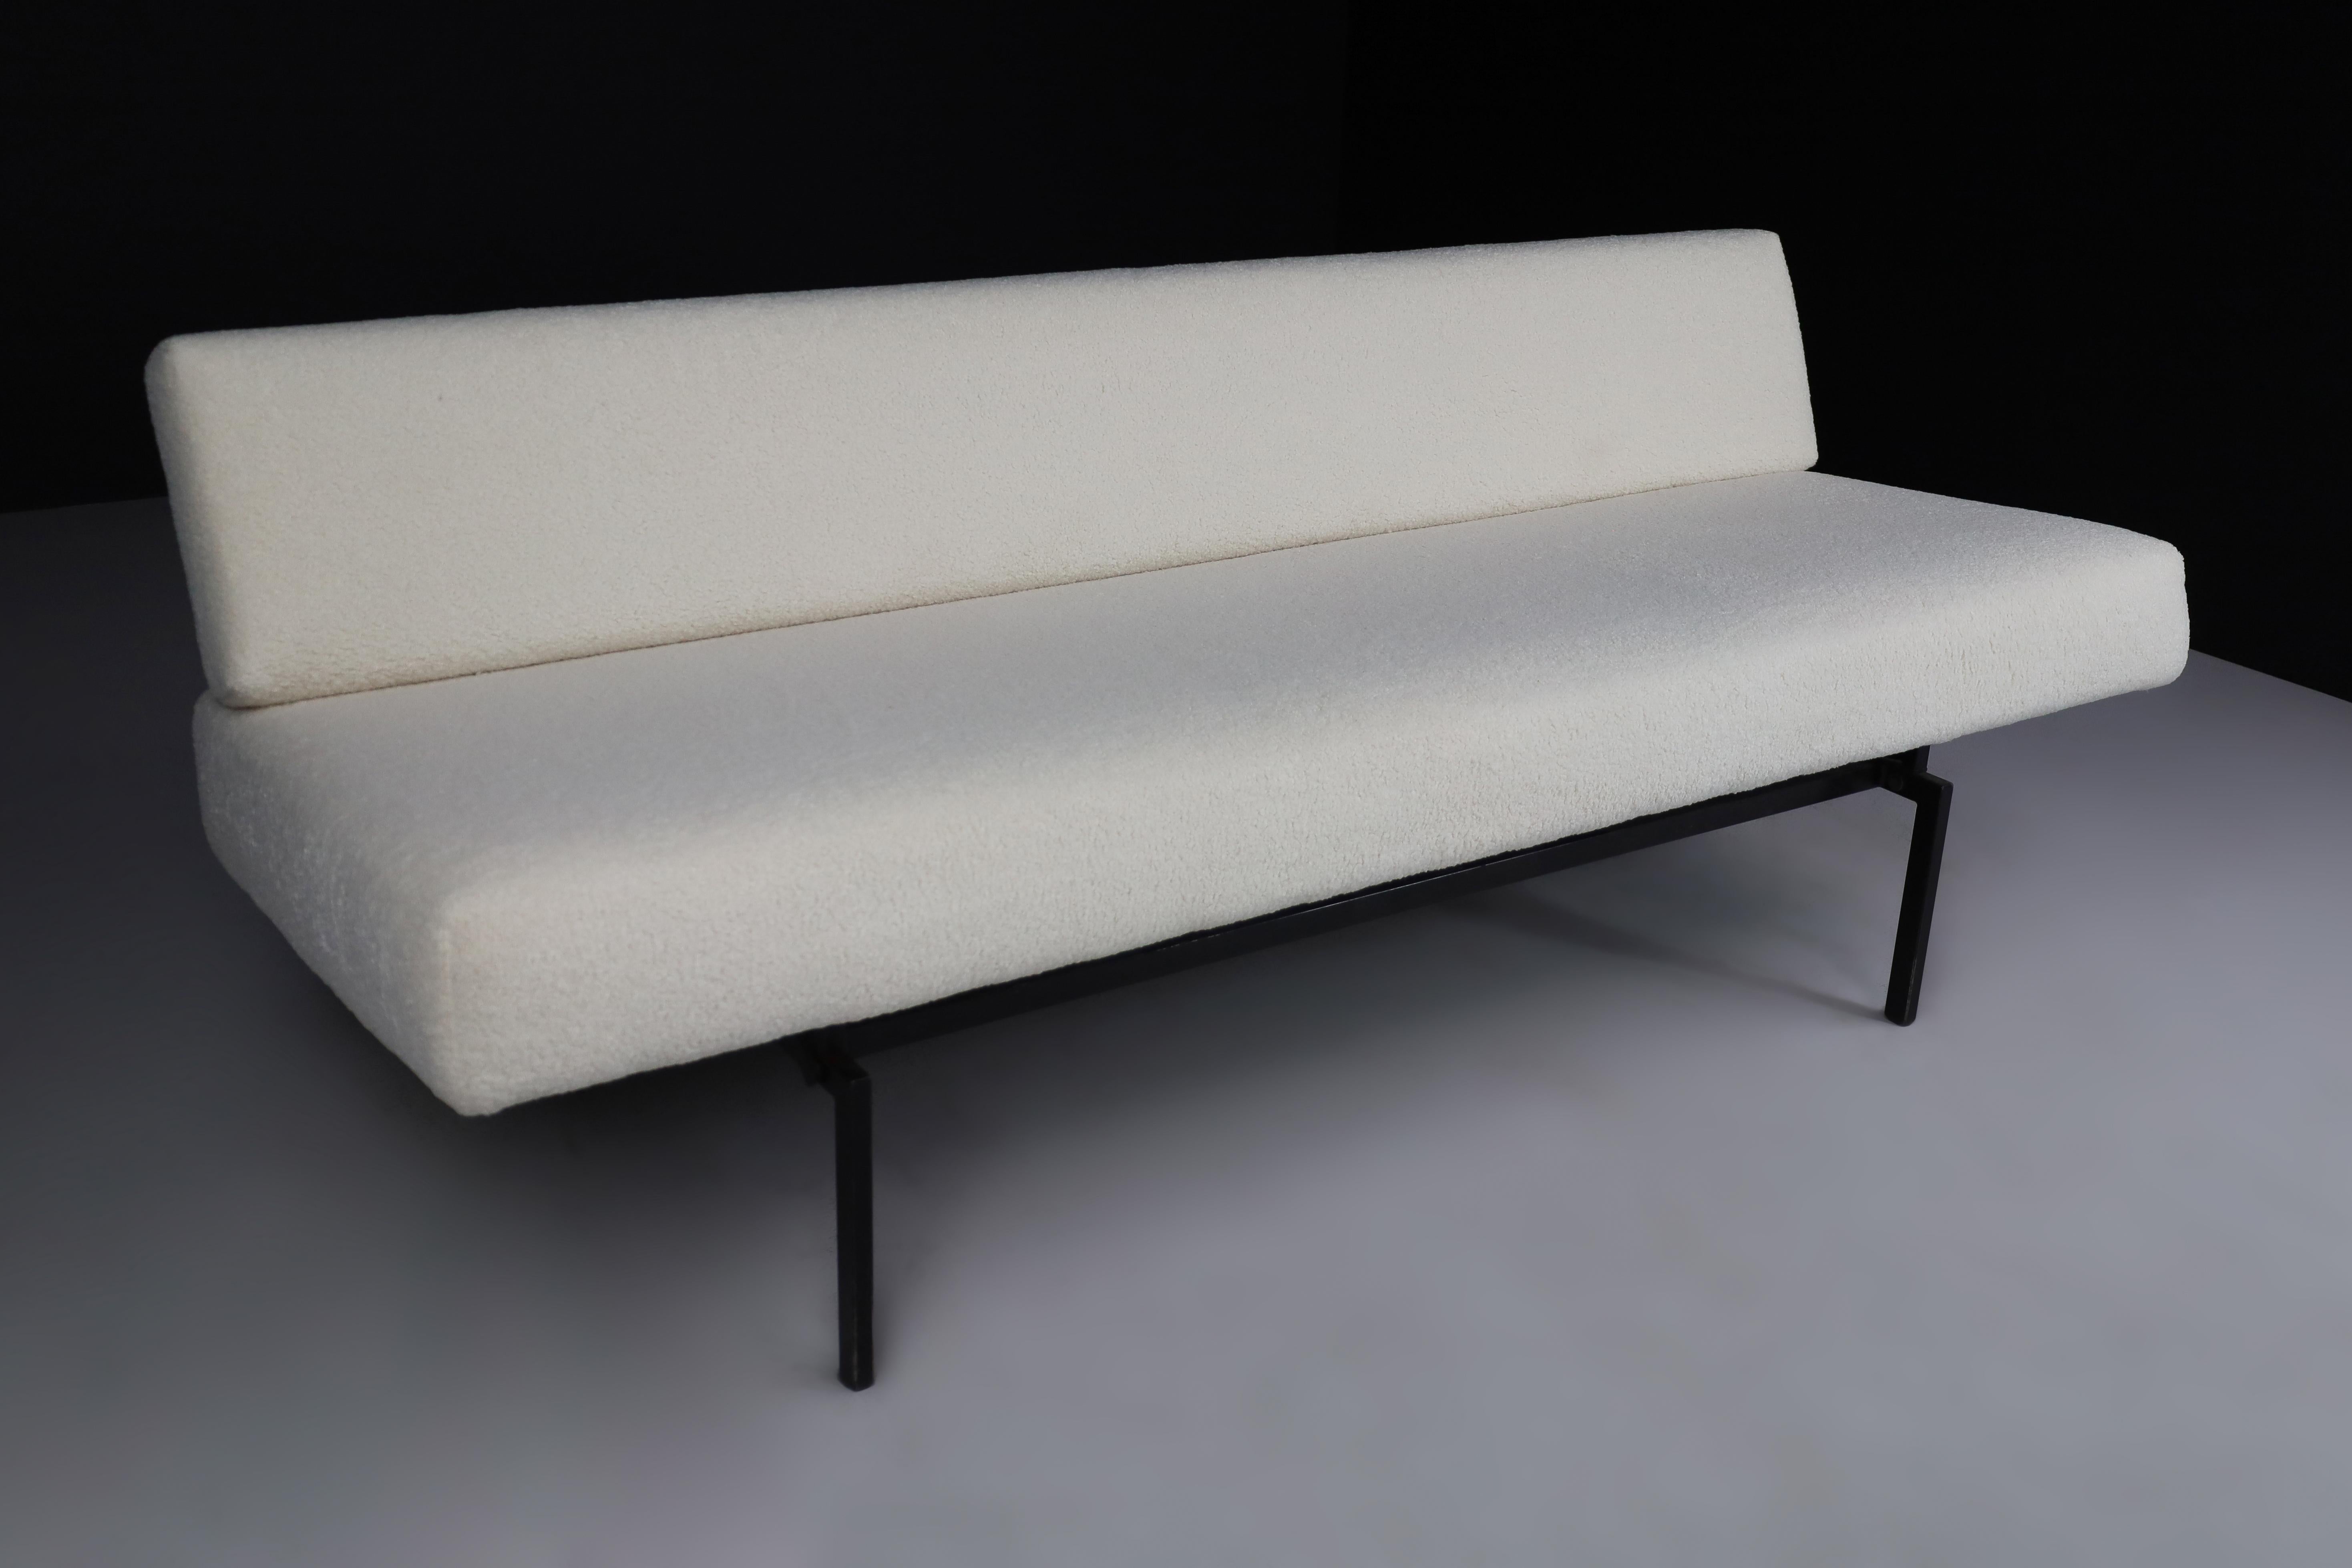 Mid-20th Century Martin Visser Sofa or Sleeper Sofa for 't Spectrum in New Teddy Fabric, 1960s